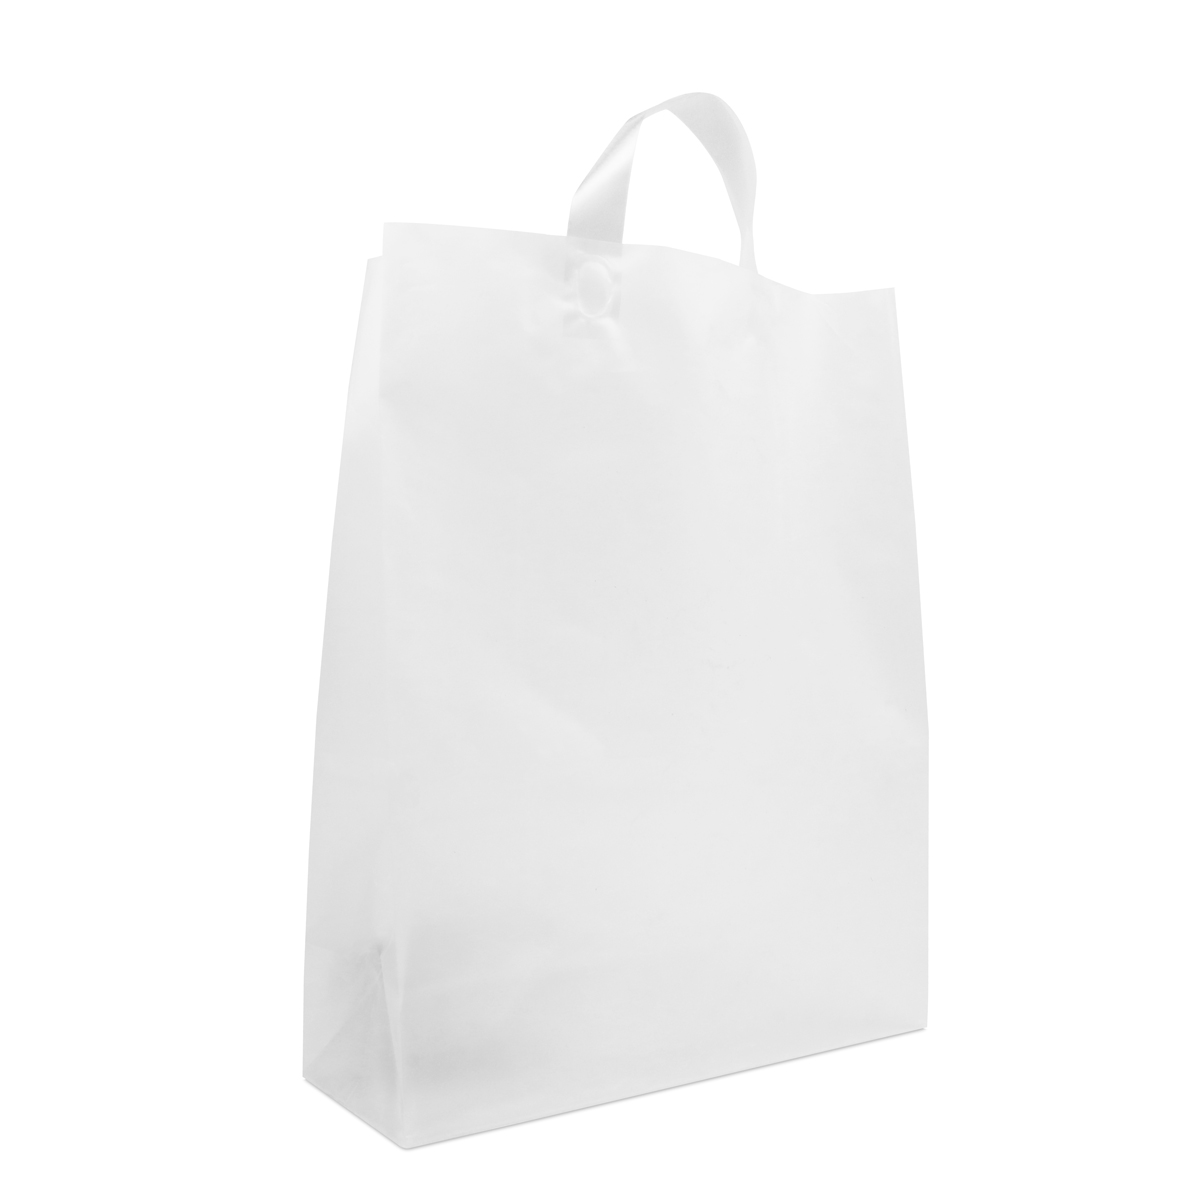 Plastic bag with bottom fold